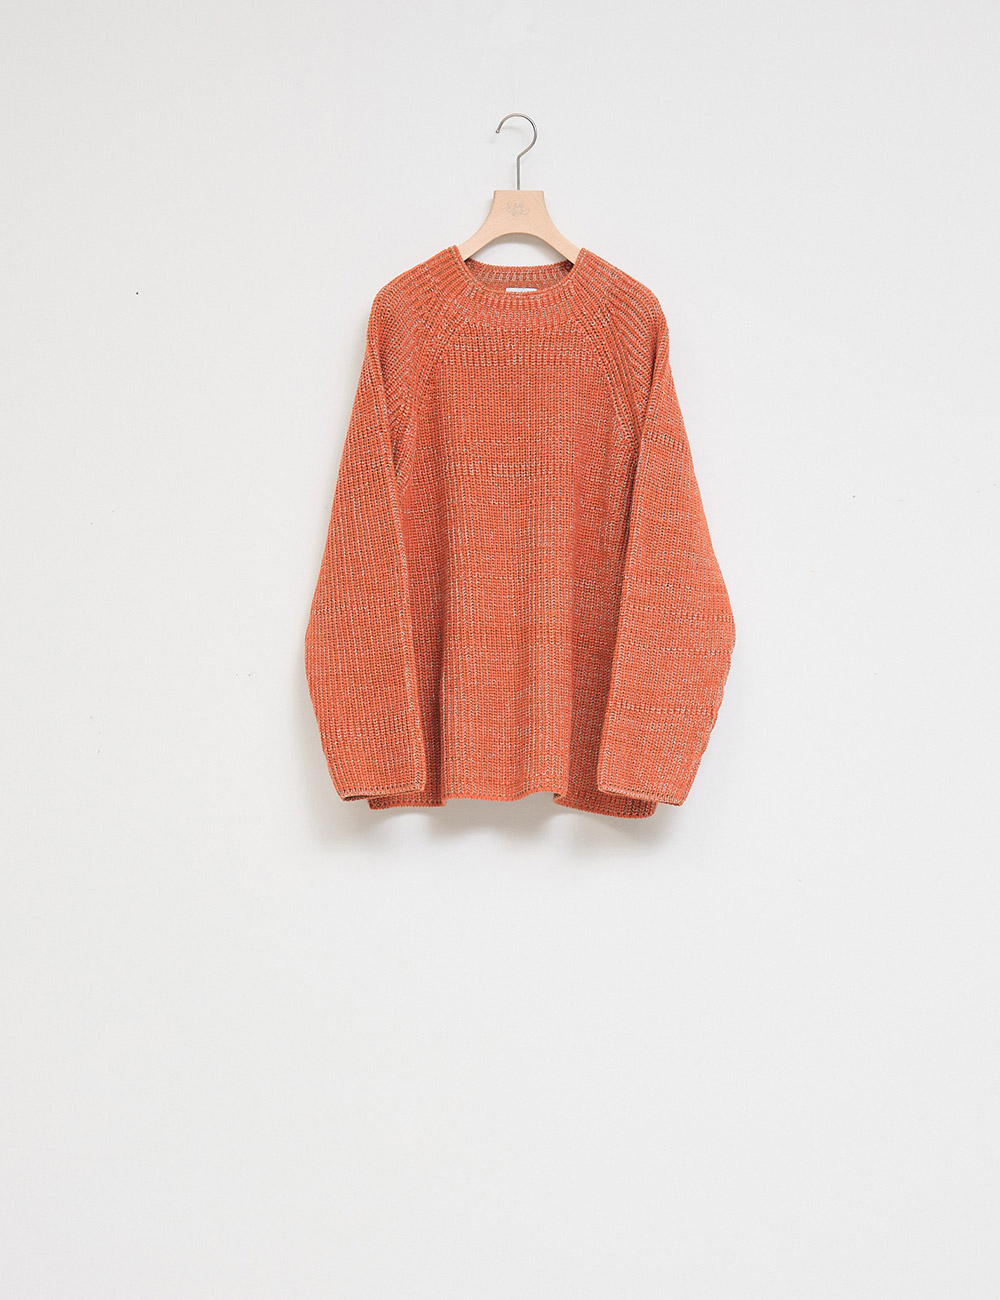 Over Knit (Orange Acrylic Wool)